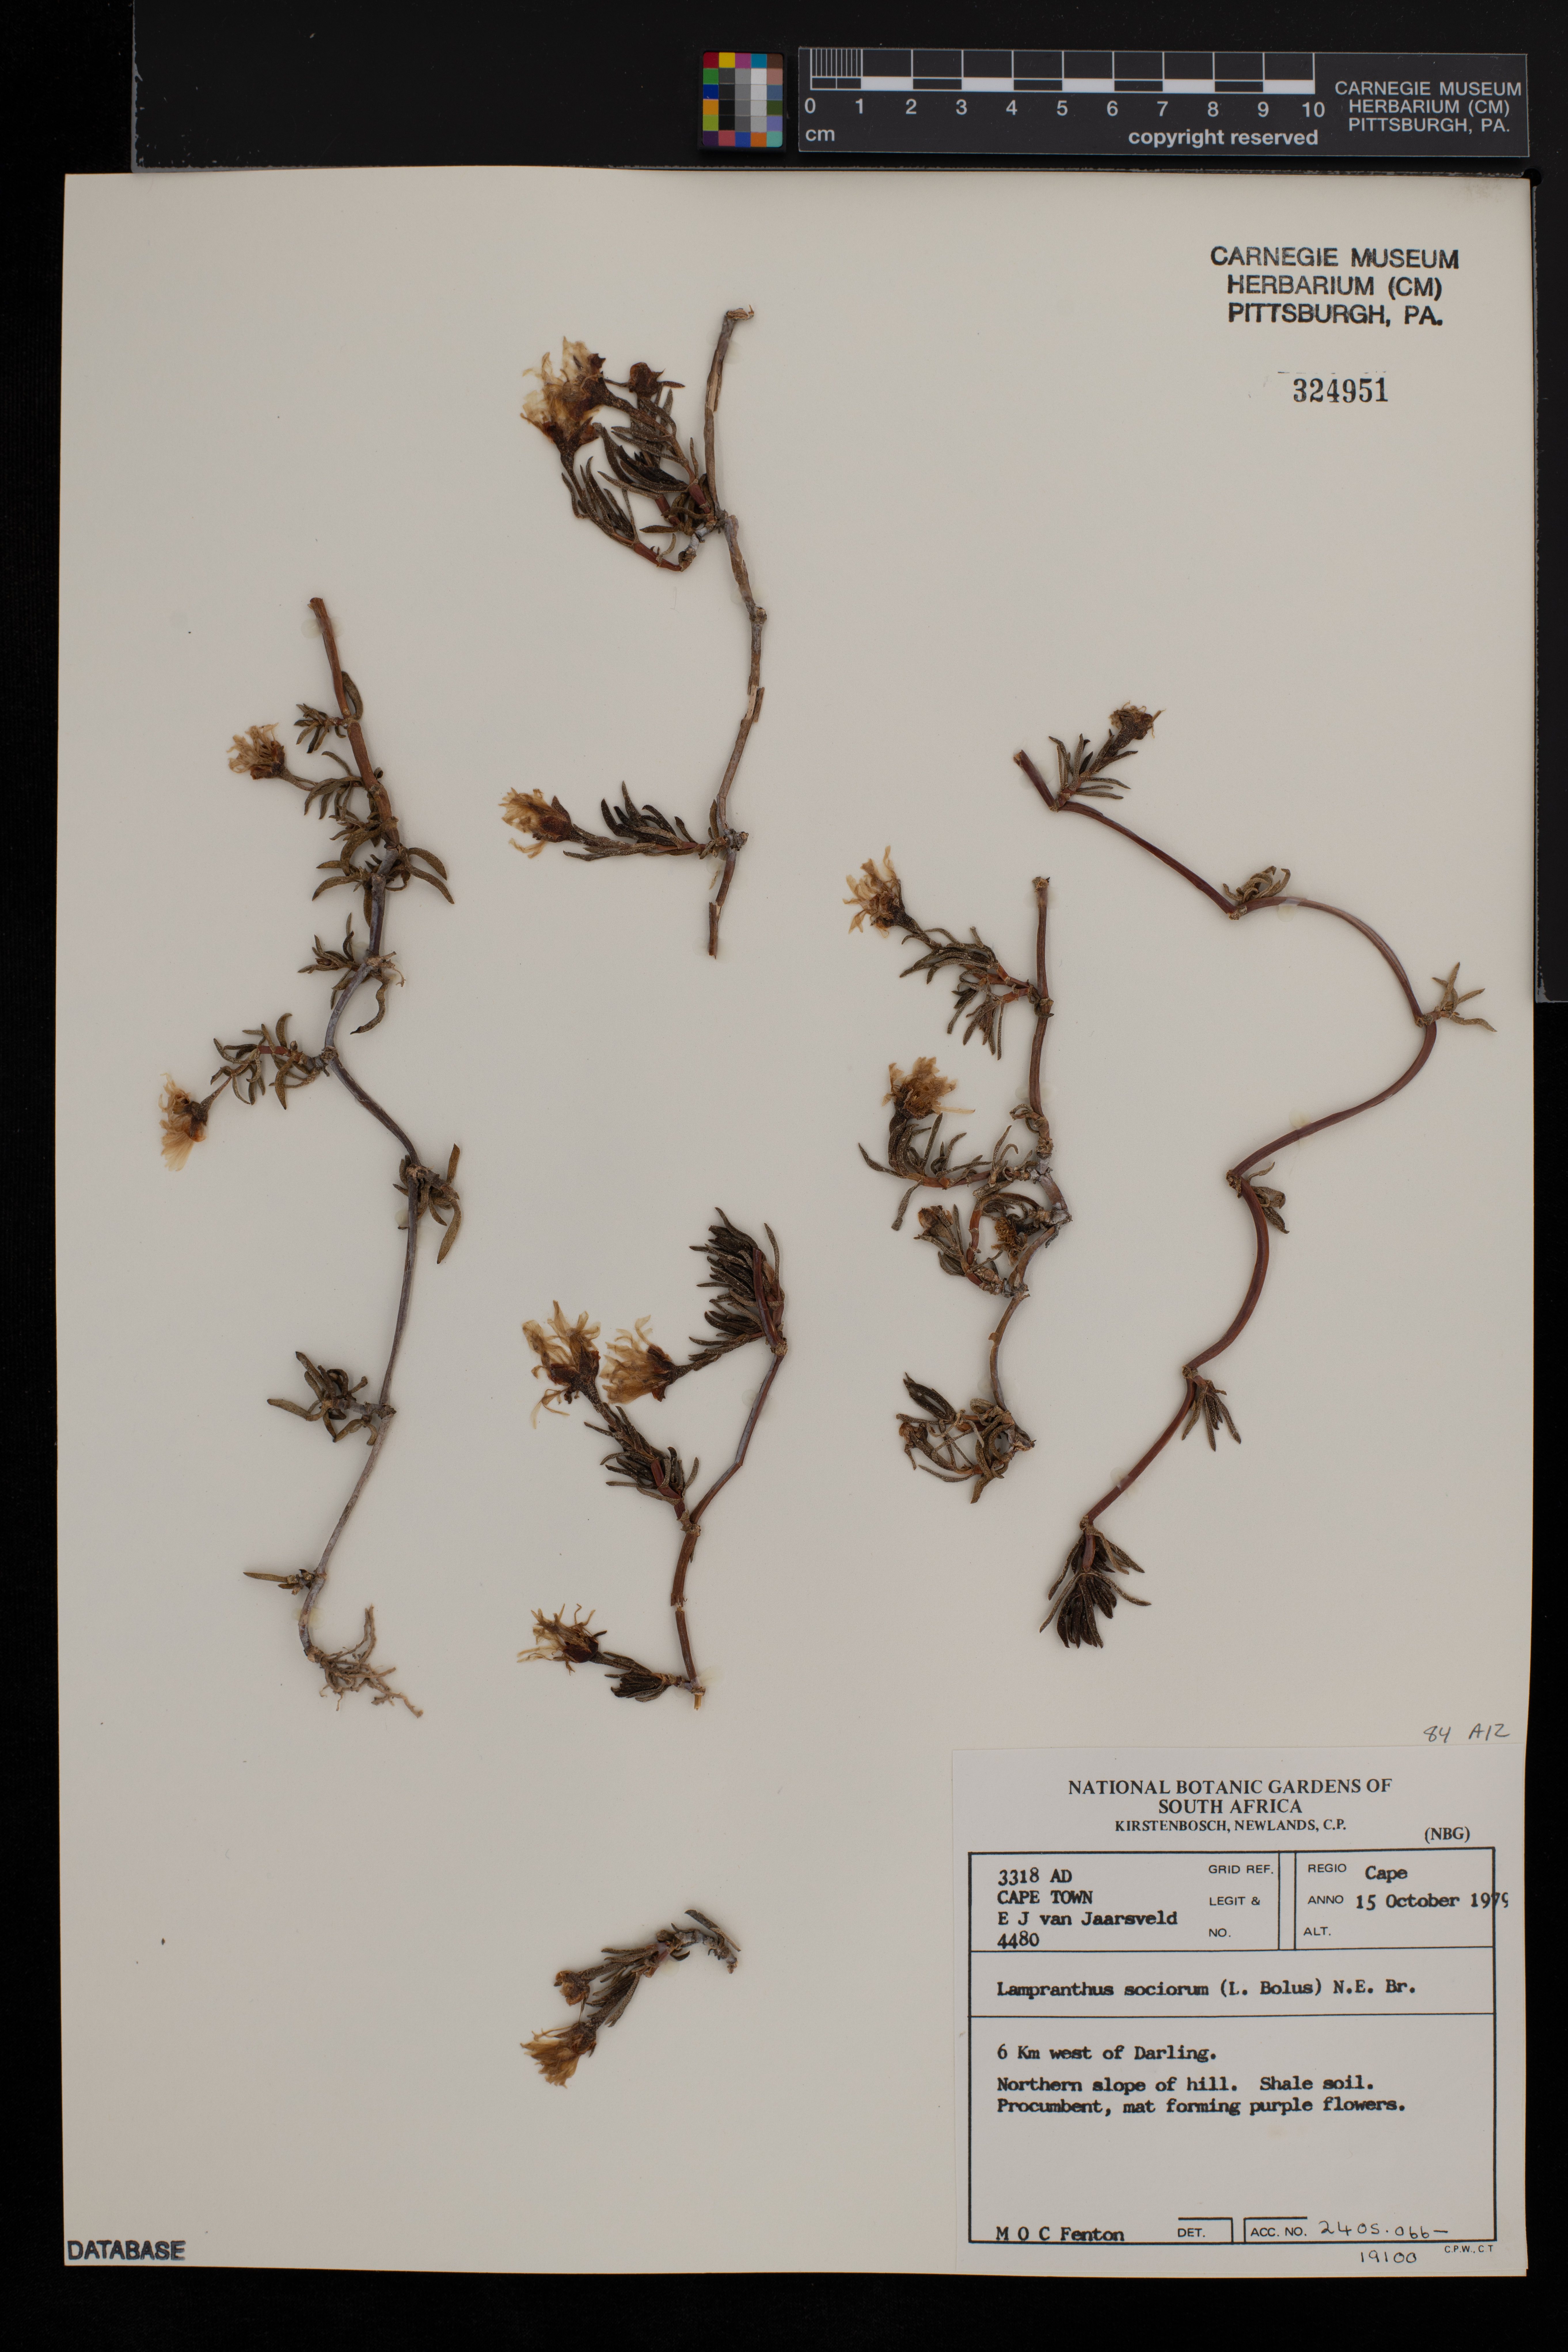 Lampranthus sociorum image